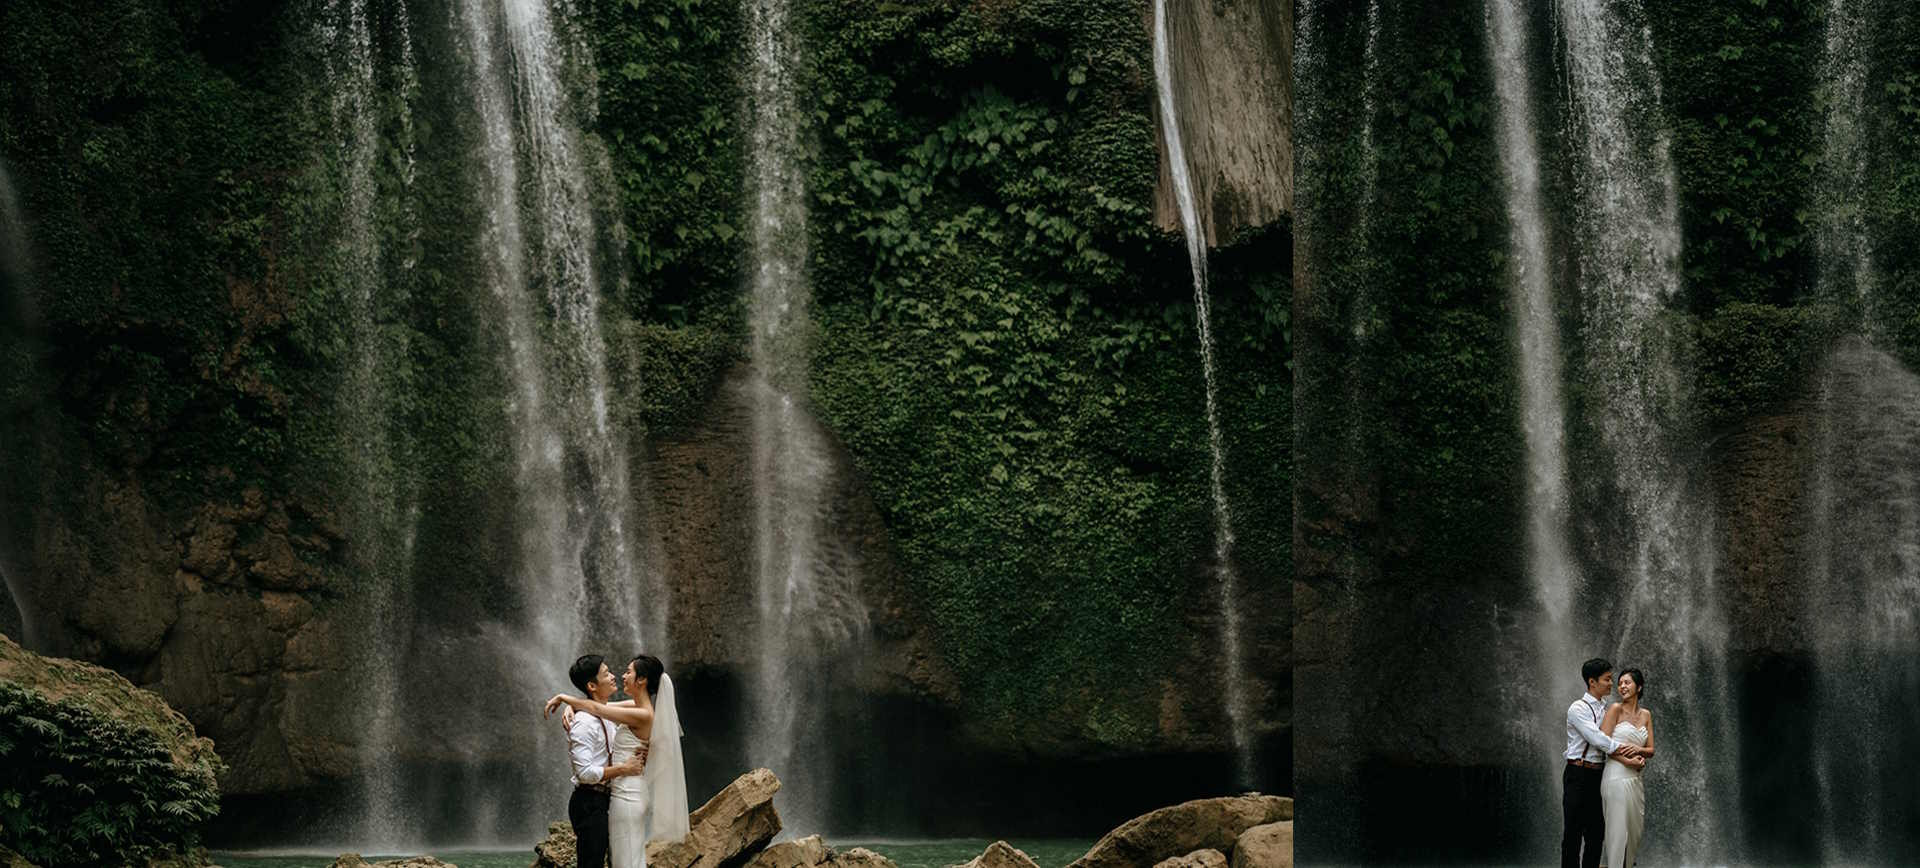 Vietnam Waterfall Elopement Wedding Adventure